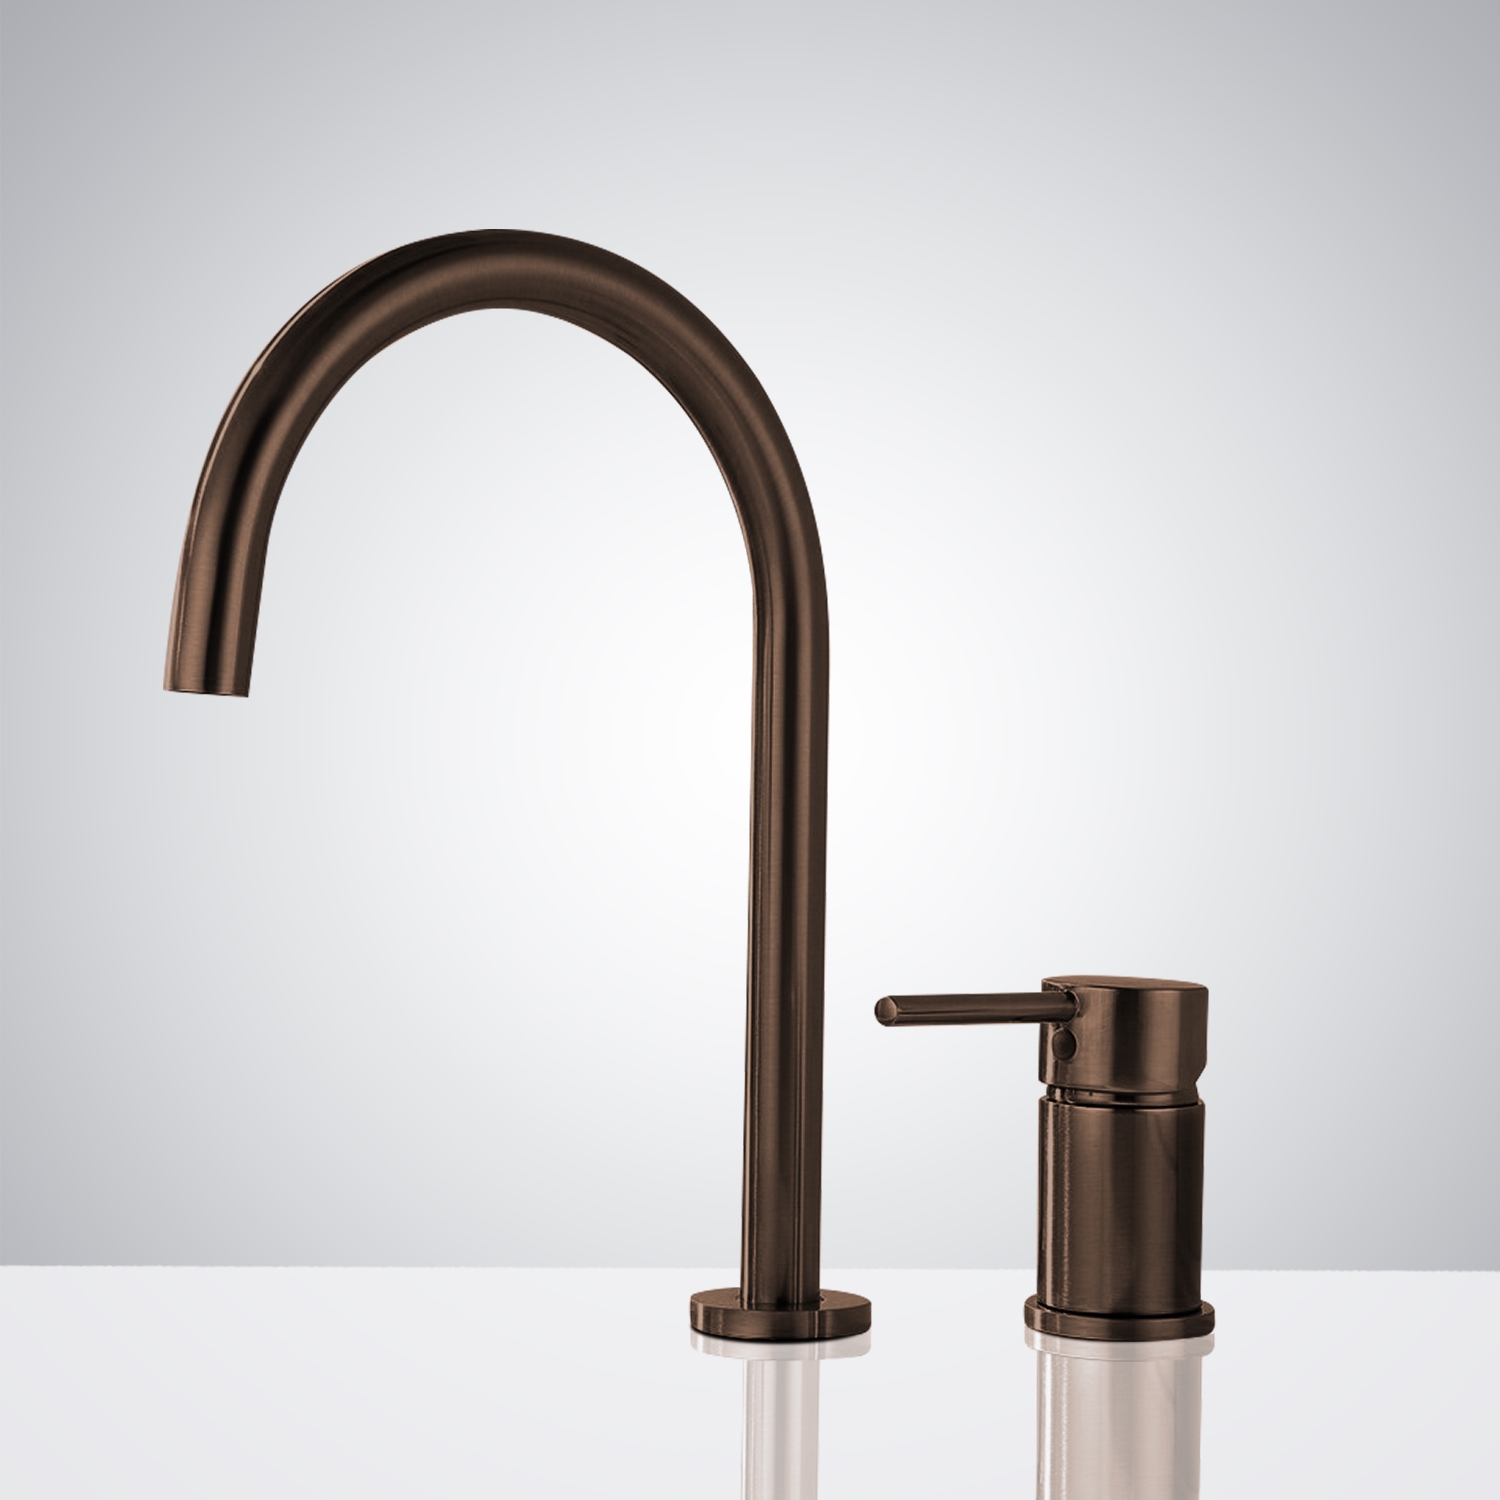 Fontana Commercial Oil Rubbed Bronze Touch less Automatic Sensor Faucet & Manual Soap Dispenser